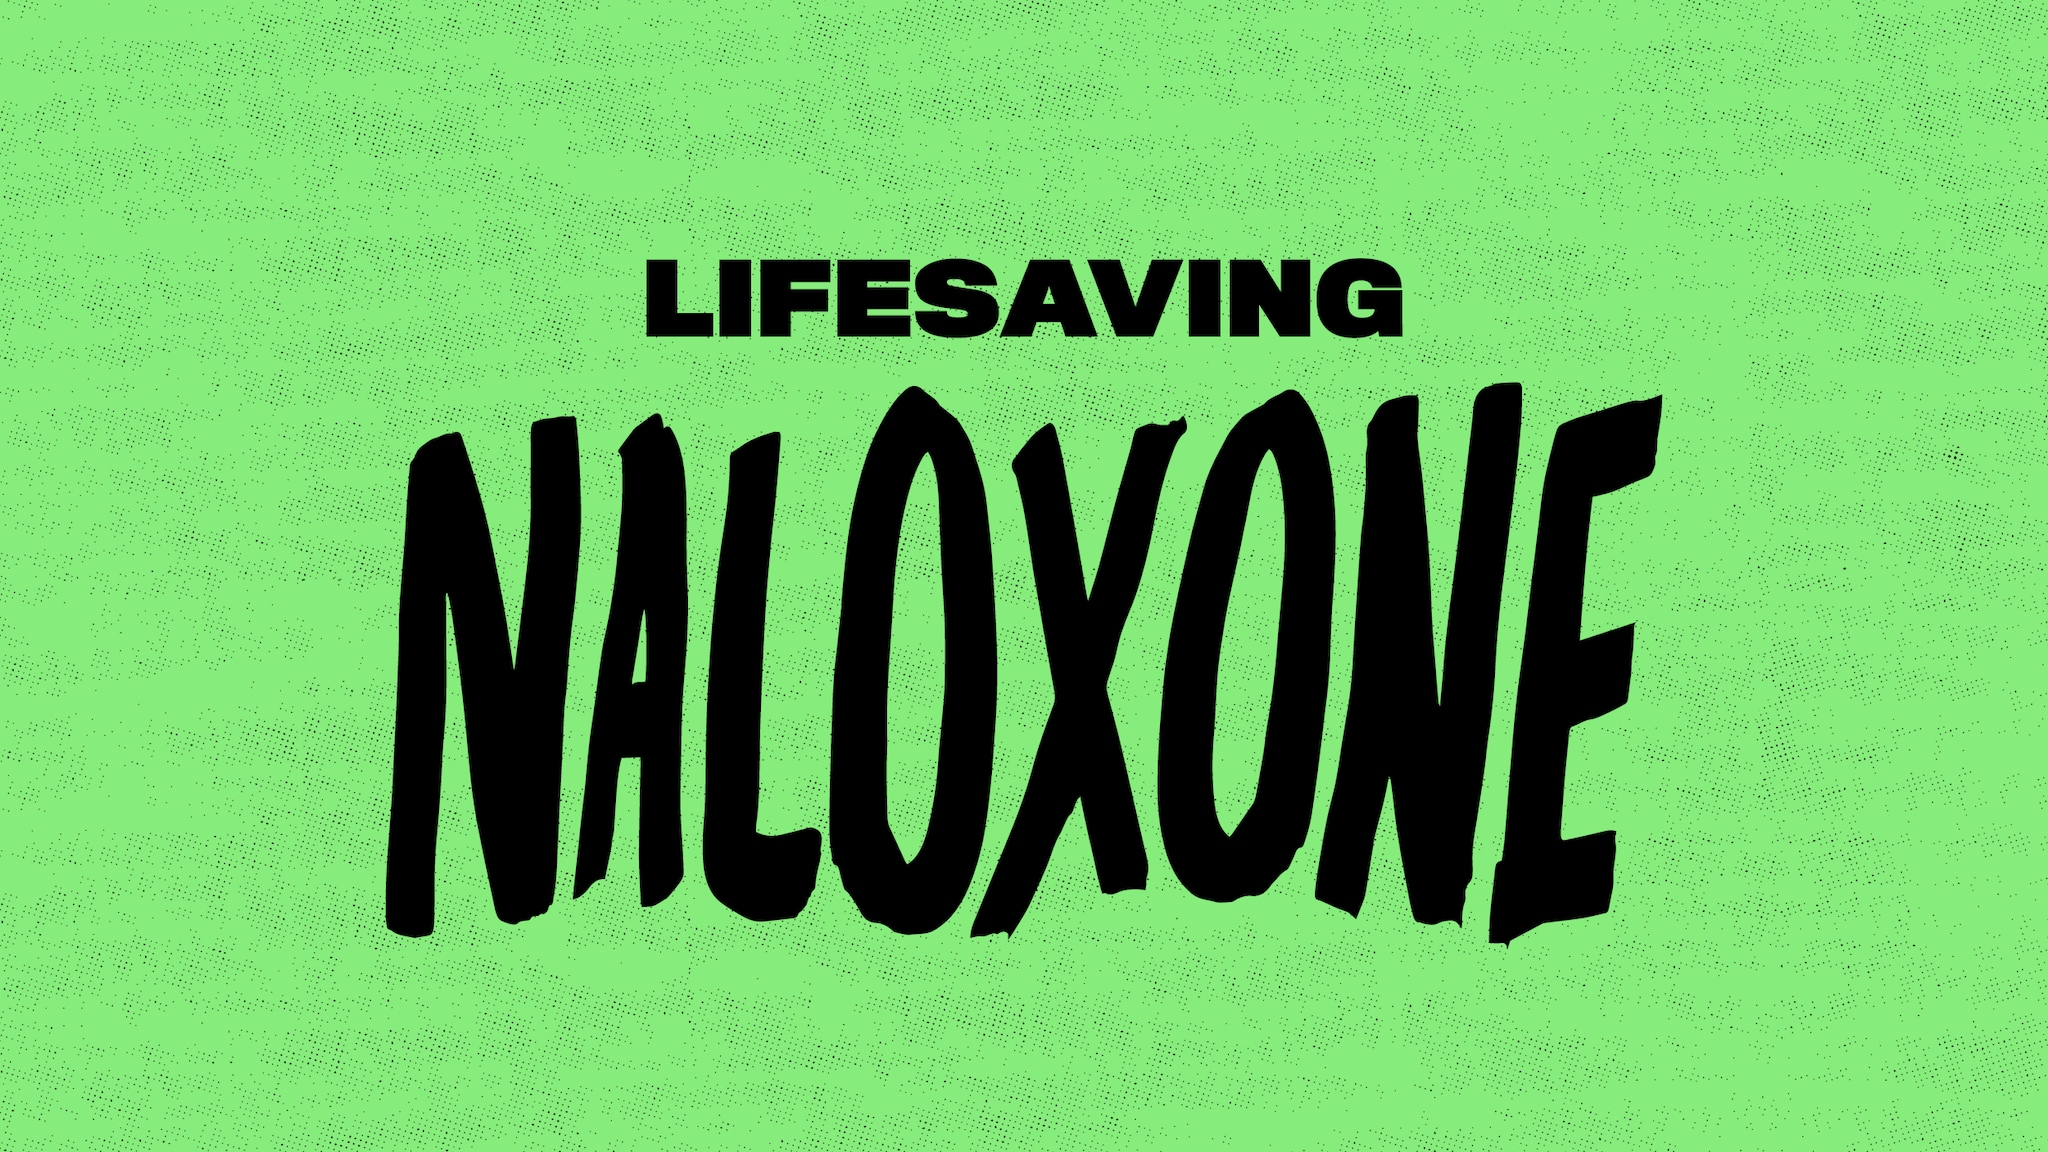 Lifesaving naloxone on green background